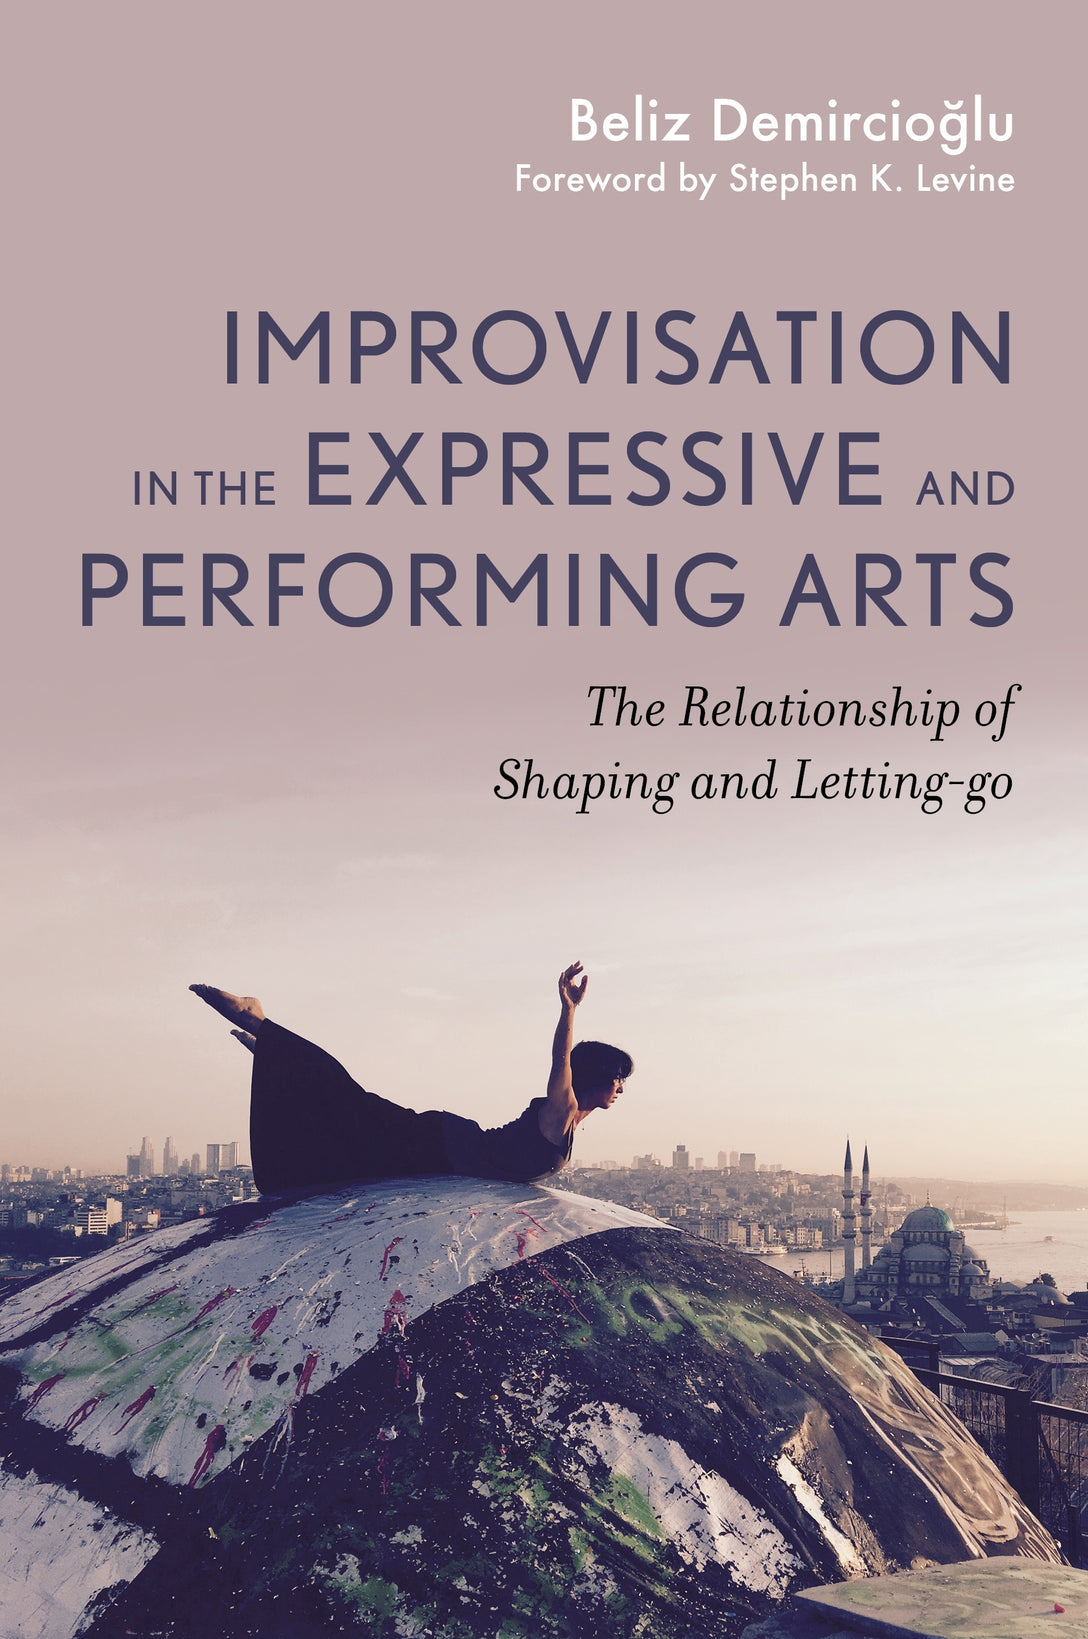 Improvisation in the Expressive and Performing Arts by Beliz Demircioglu, Stephen K. Levine